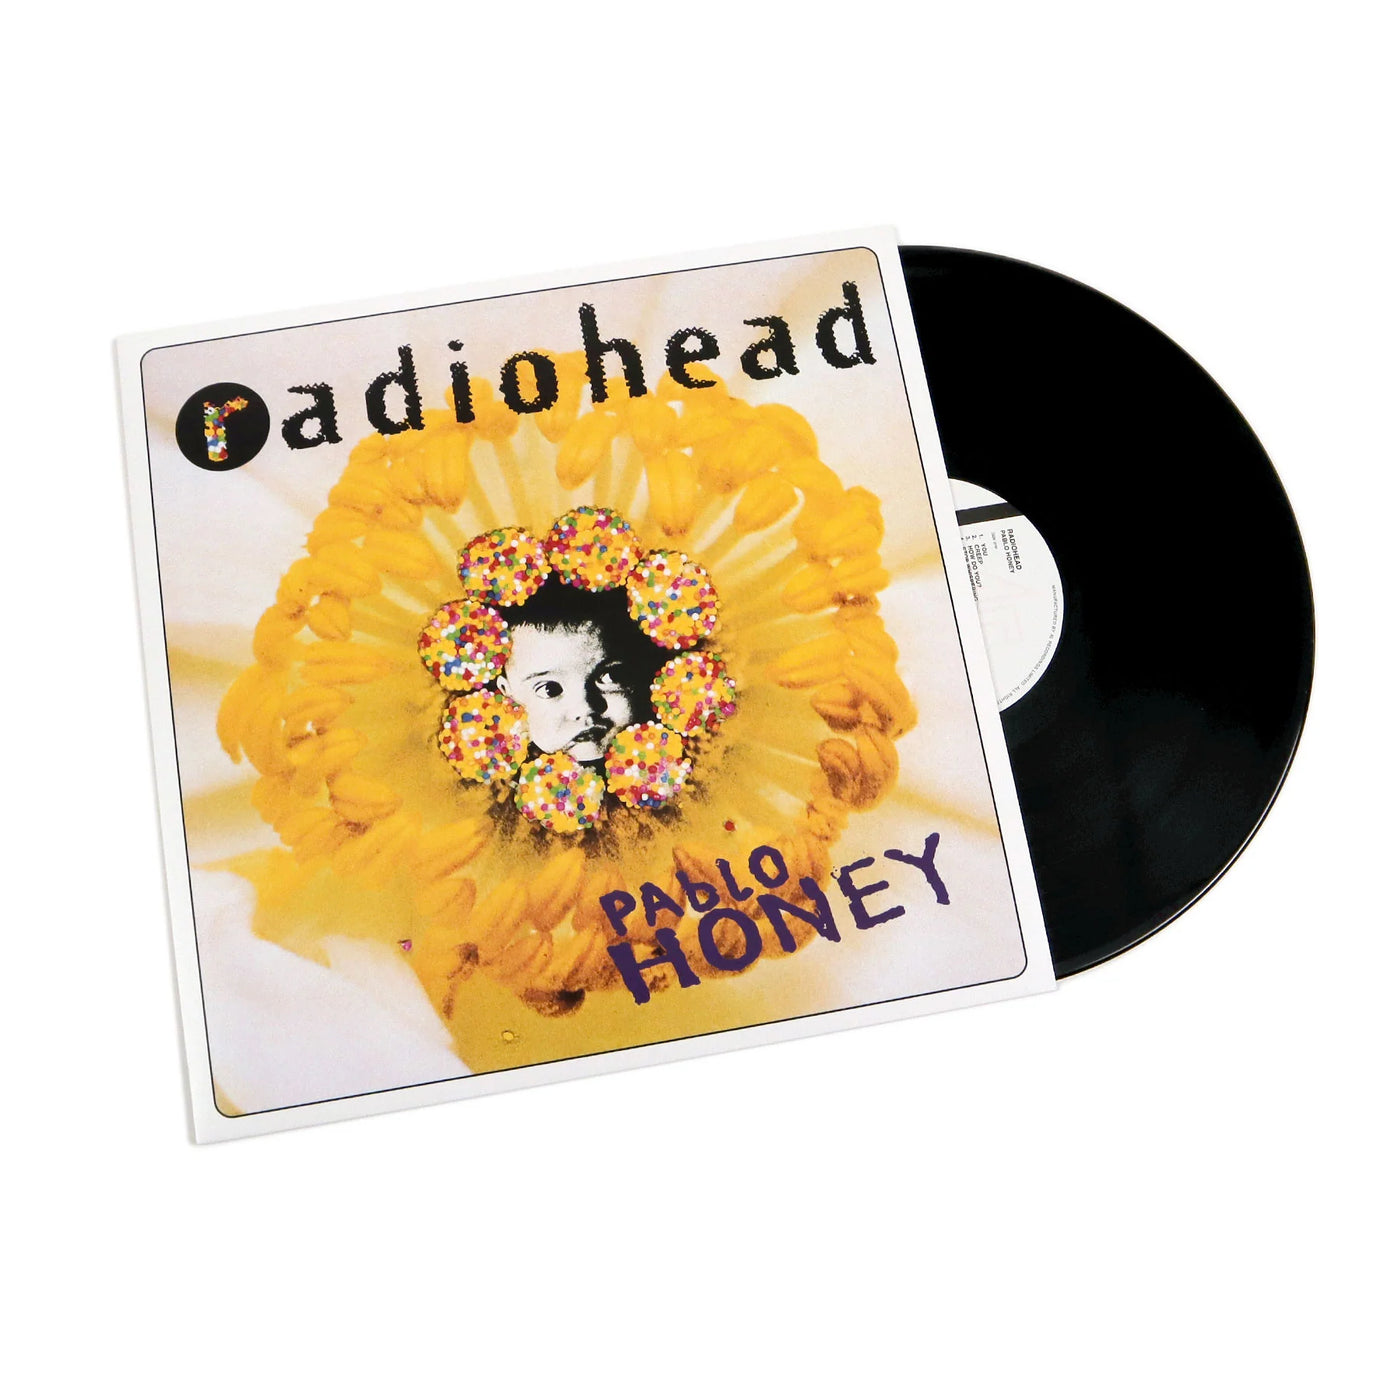 NEW/SEALED! Radiohead - Pablo Honey